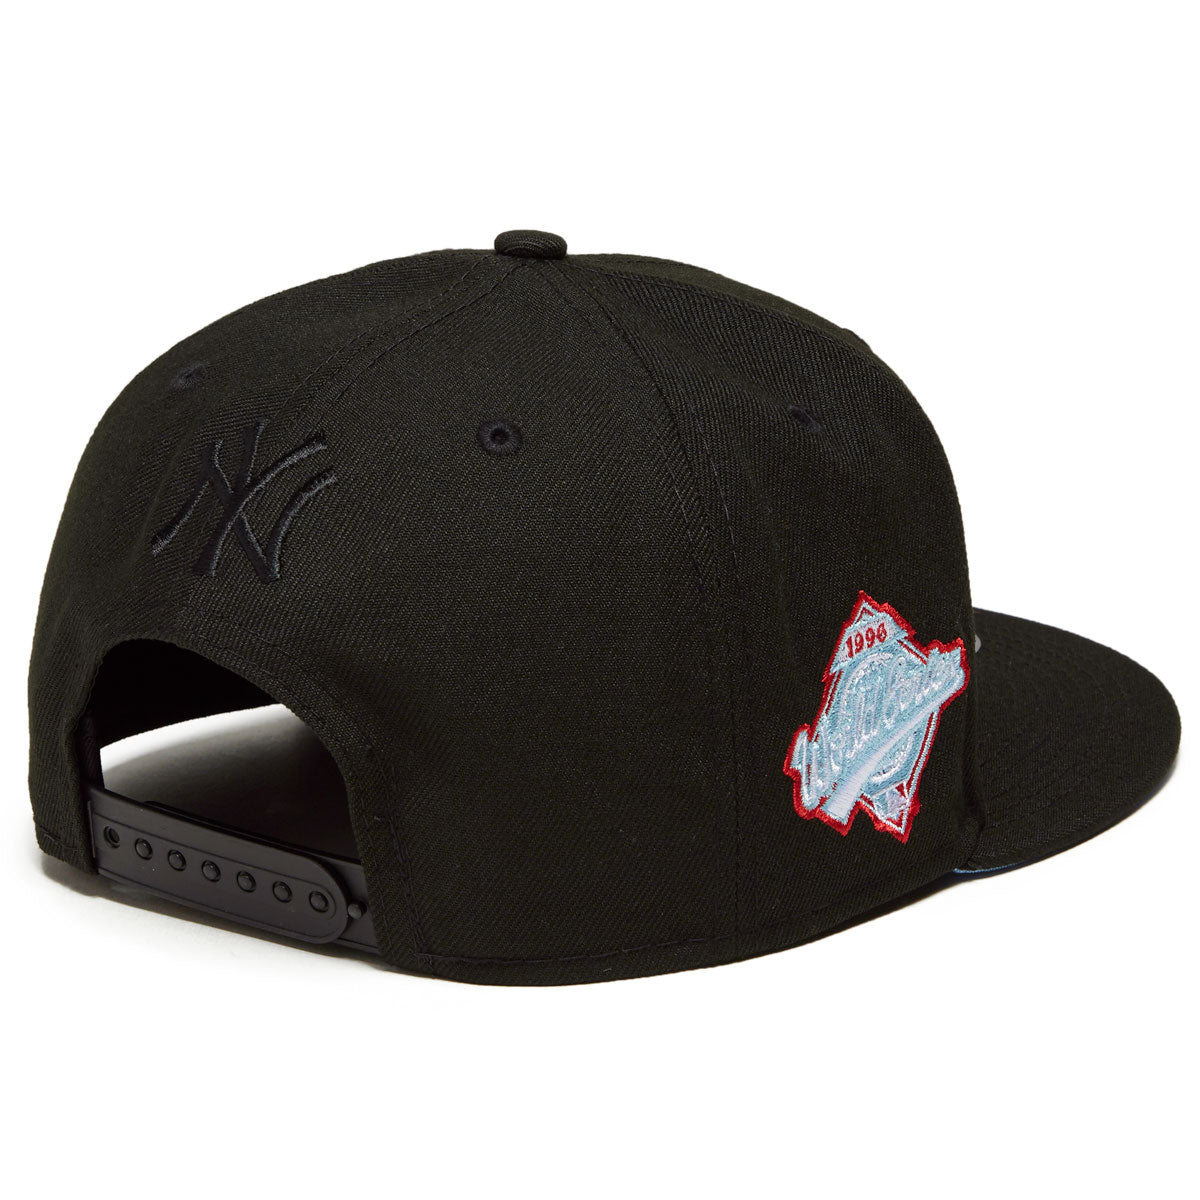 New Era MLB 950 Team Fire Hat - New York Yankees/Black